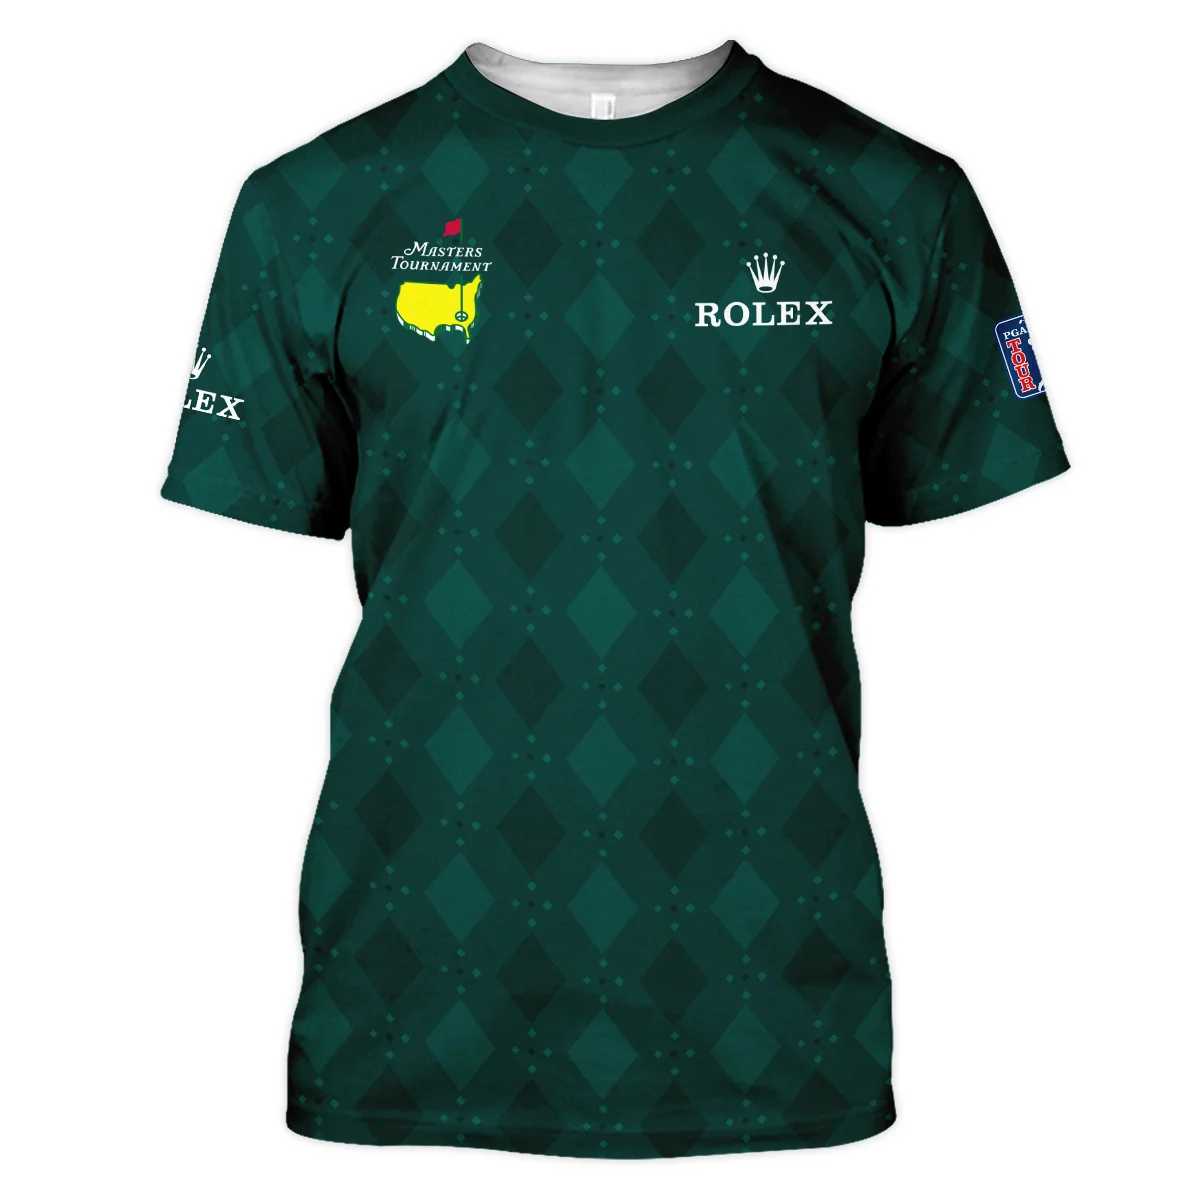 Stars Dark Green Golf Masters Tournament Rolex Vneck Polo Shirt Style Classic Polo Shirt For Men